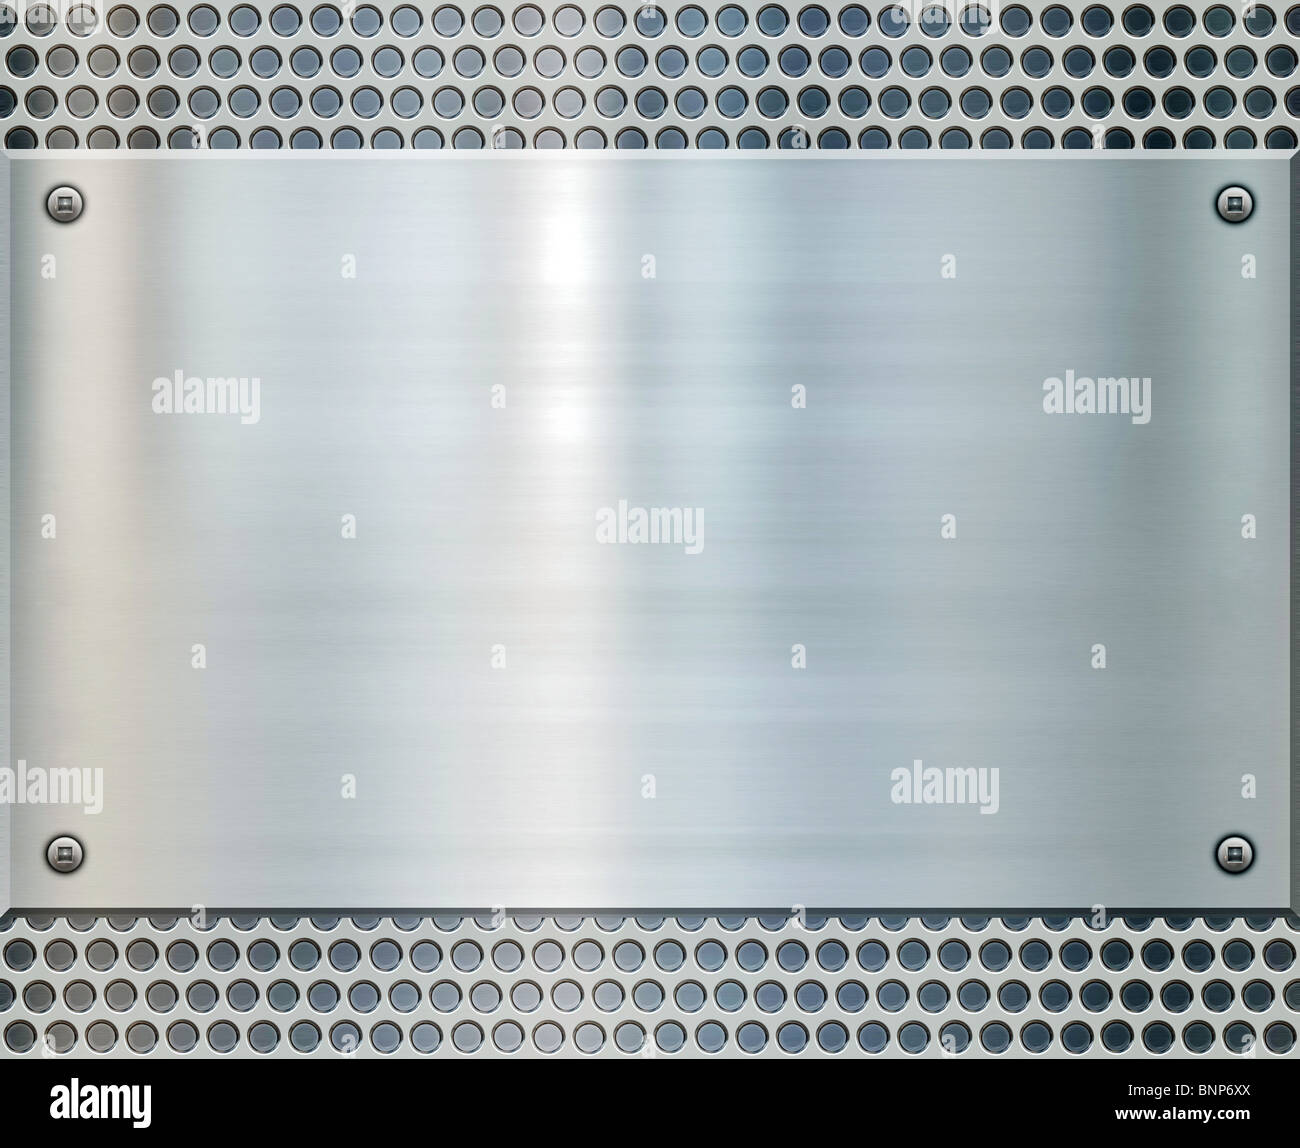 Plaque de métal brillant sur fond d'aluminium perforé Banque D'Images